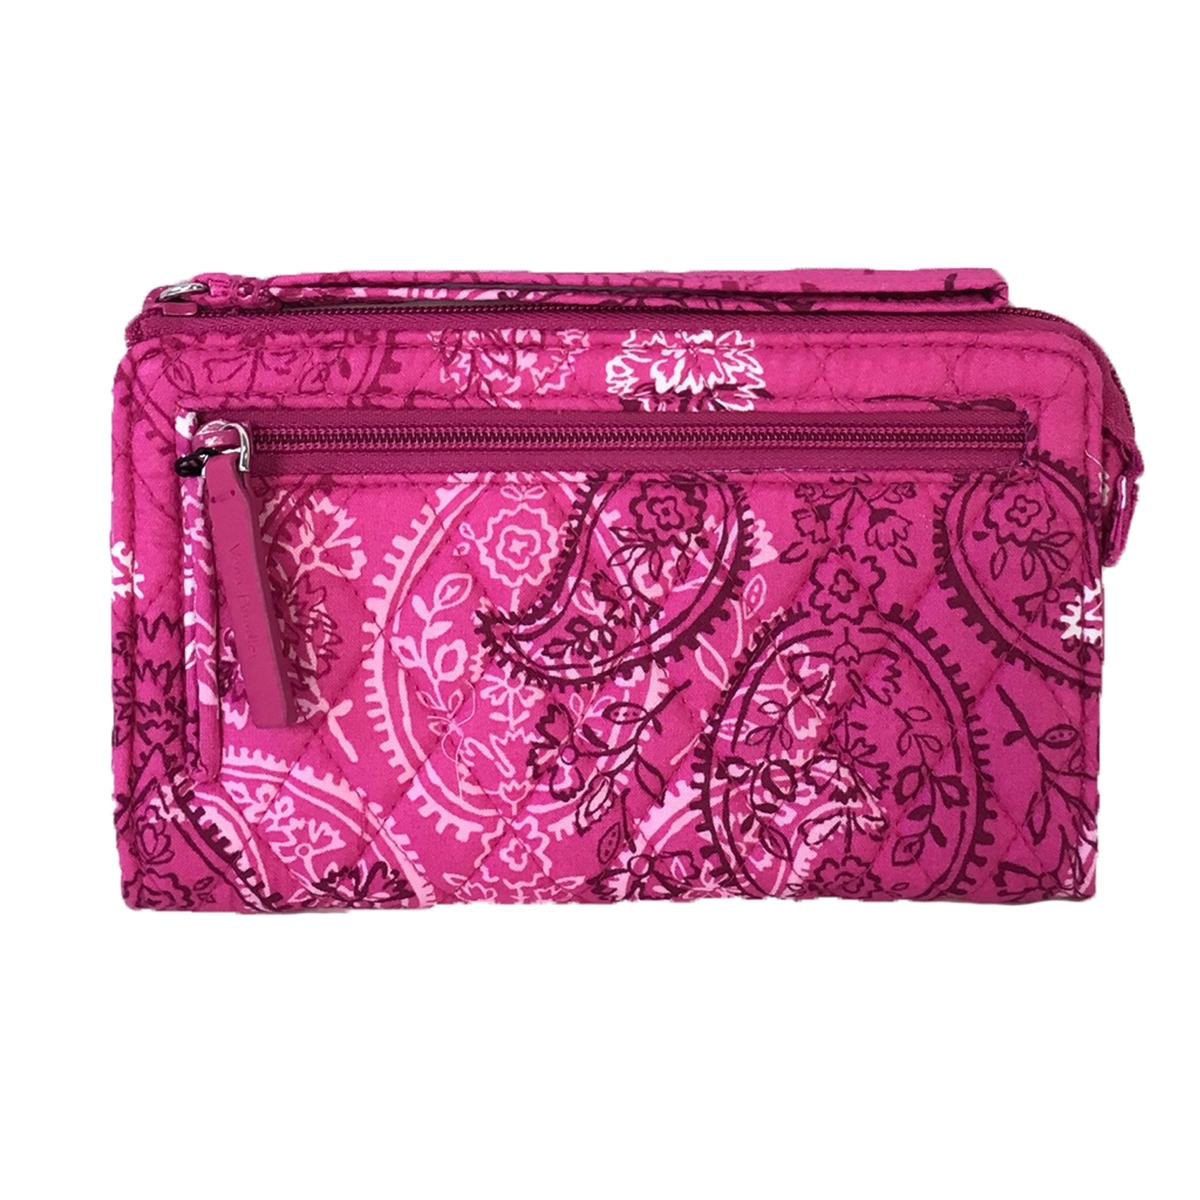 Vera Bradley Front Zip Wristlet Wallet, Stamped Paisley Pink